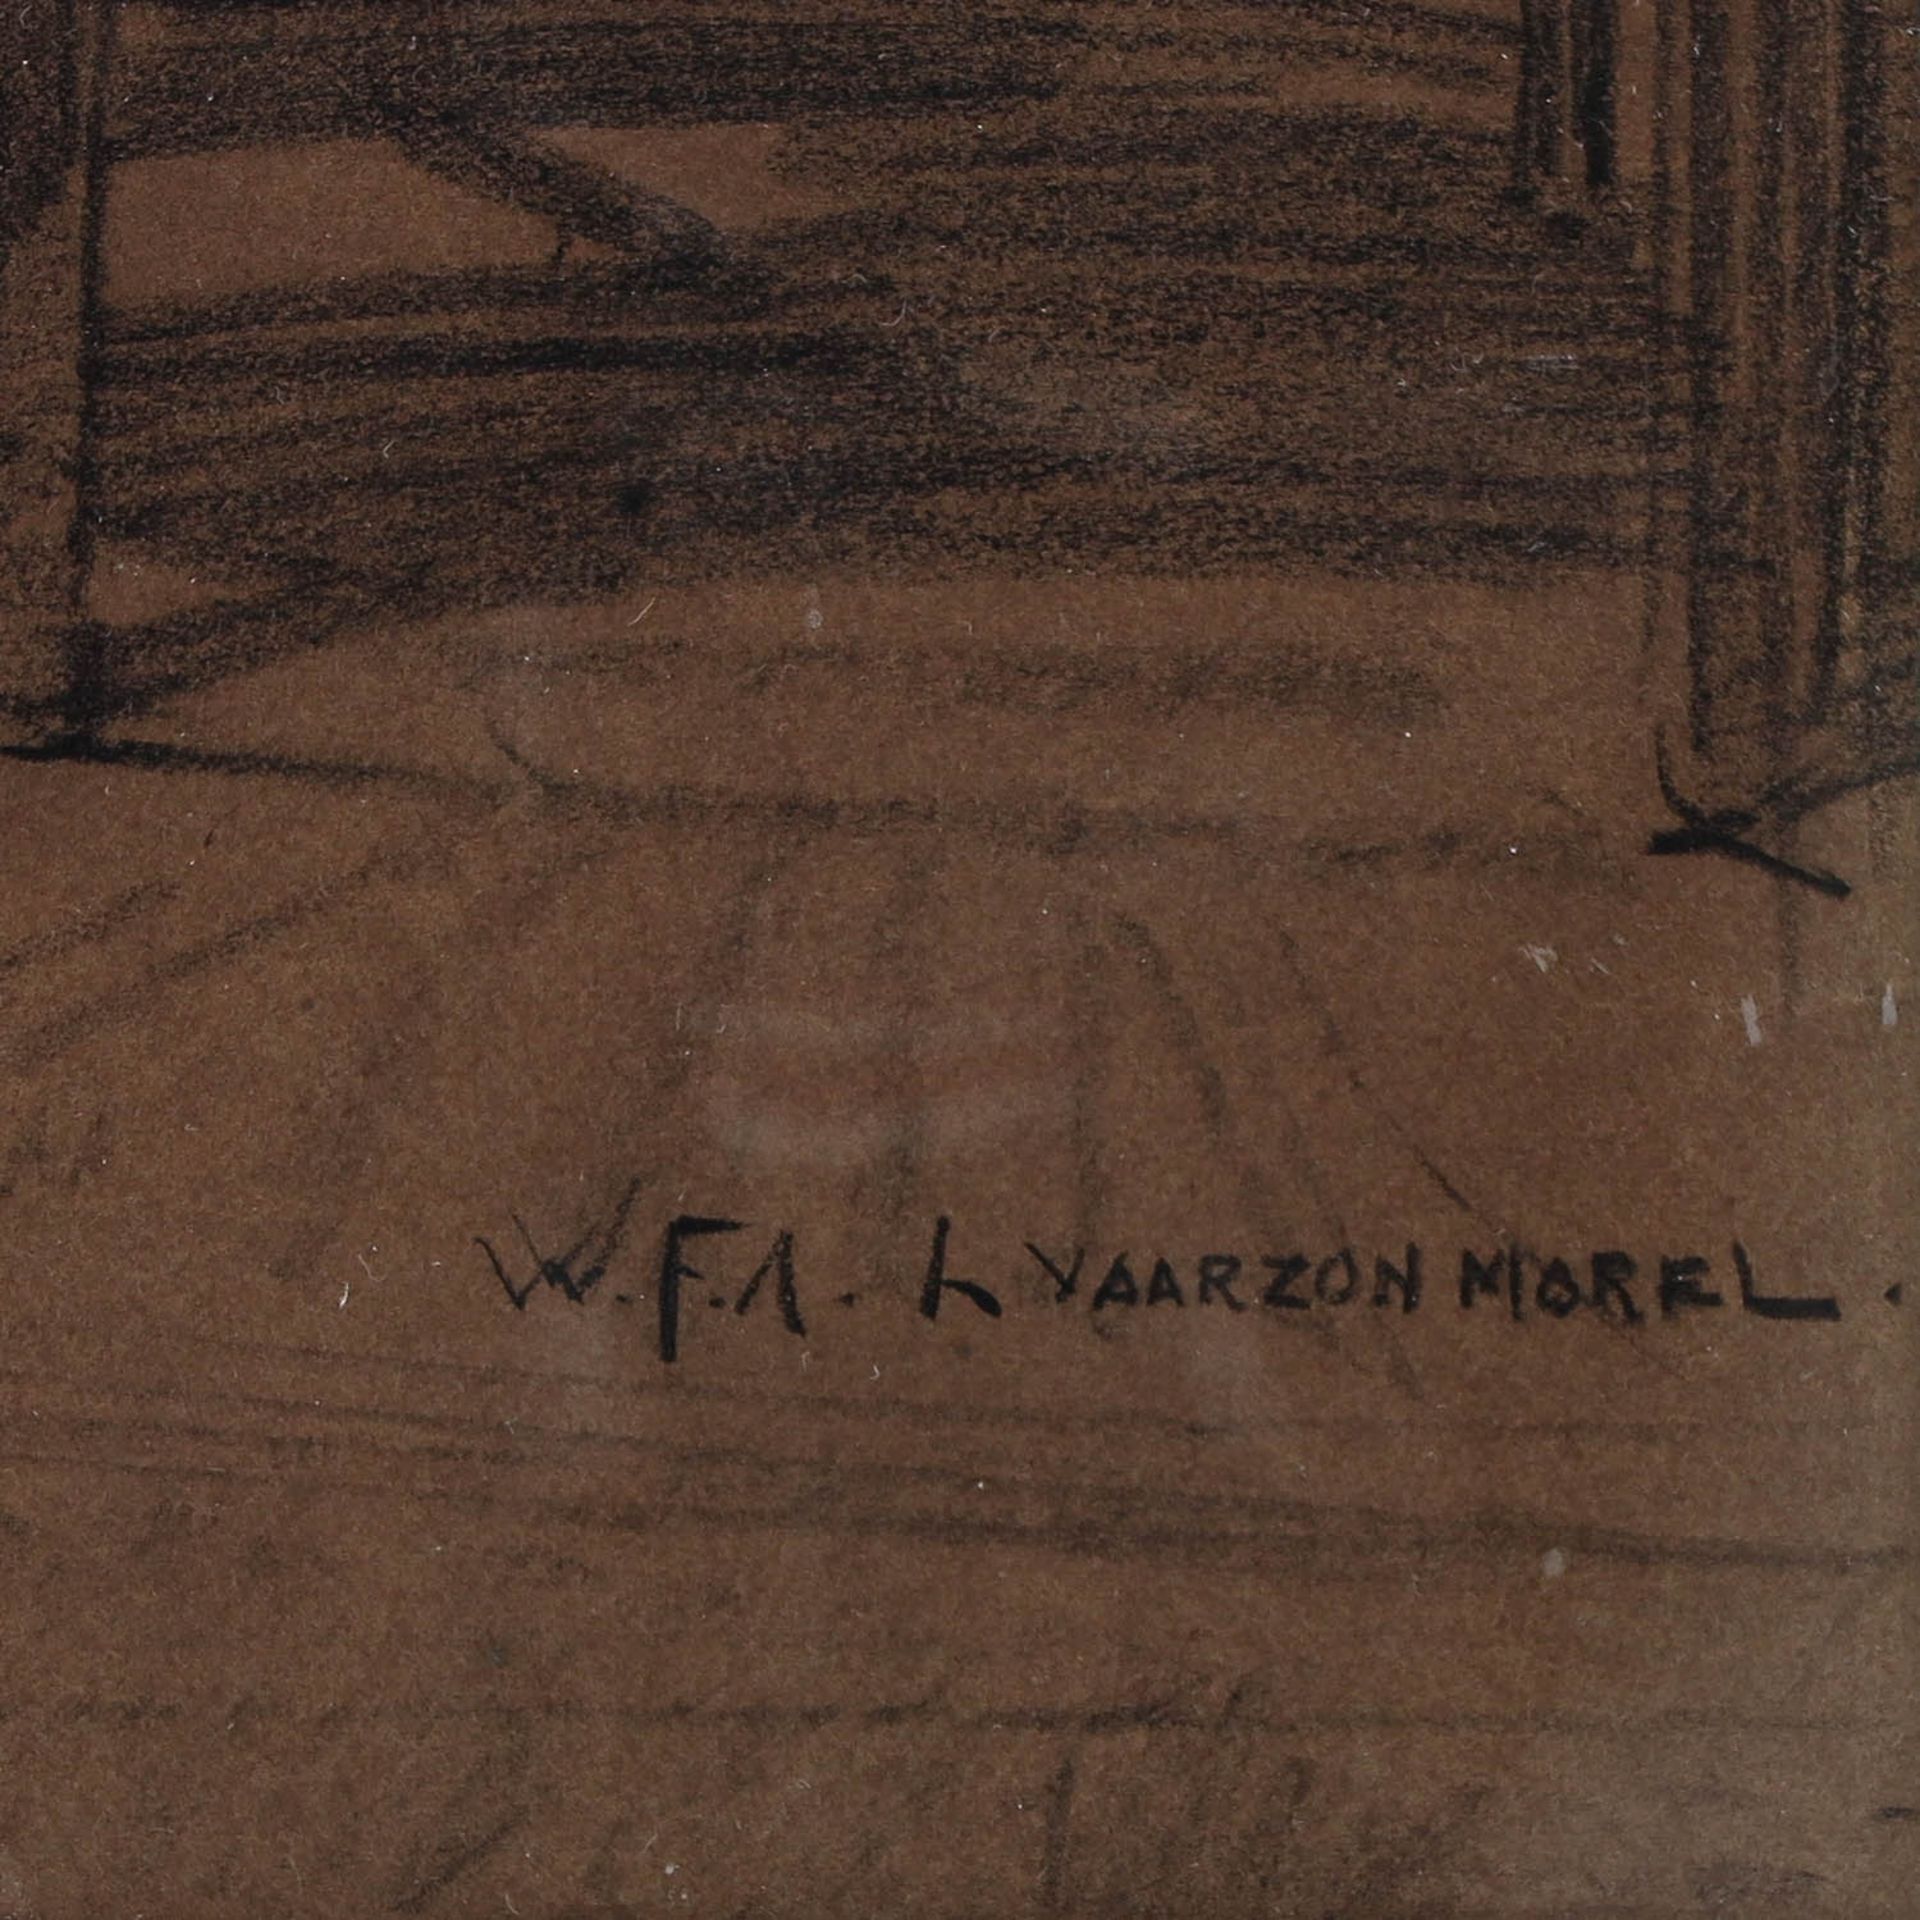 A Drawing Signed W.F.A. Vaarzon Morel - Bild 3 aus 5